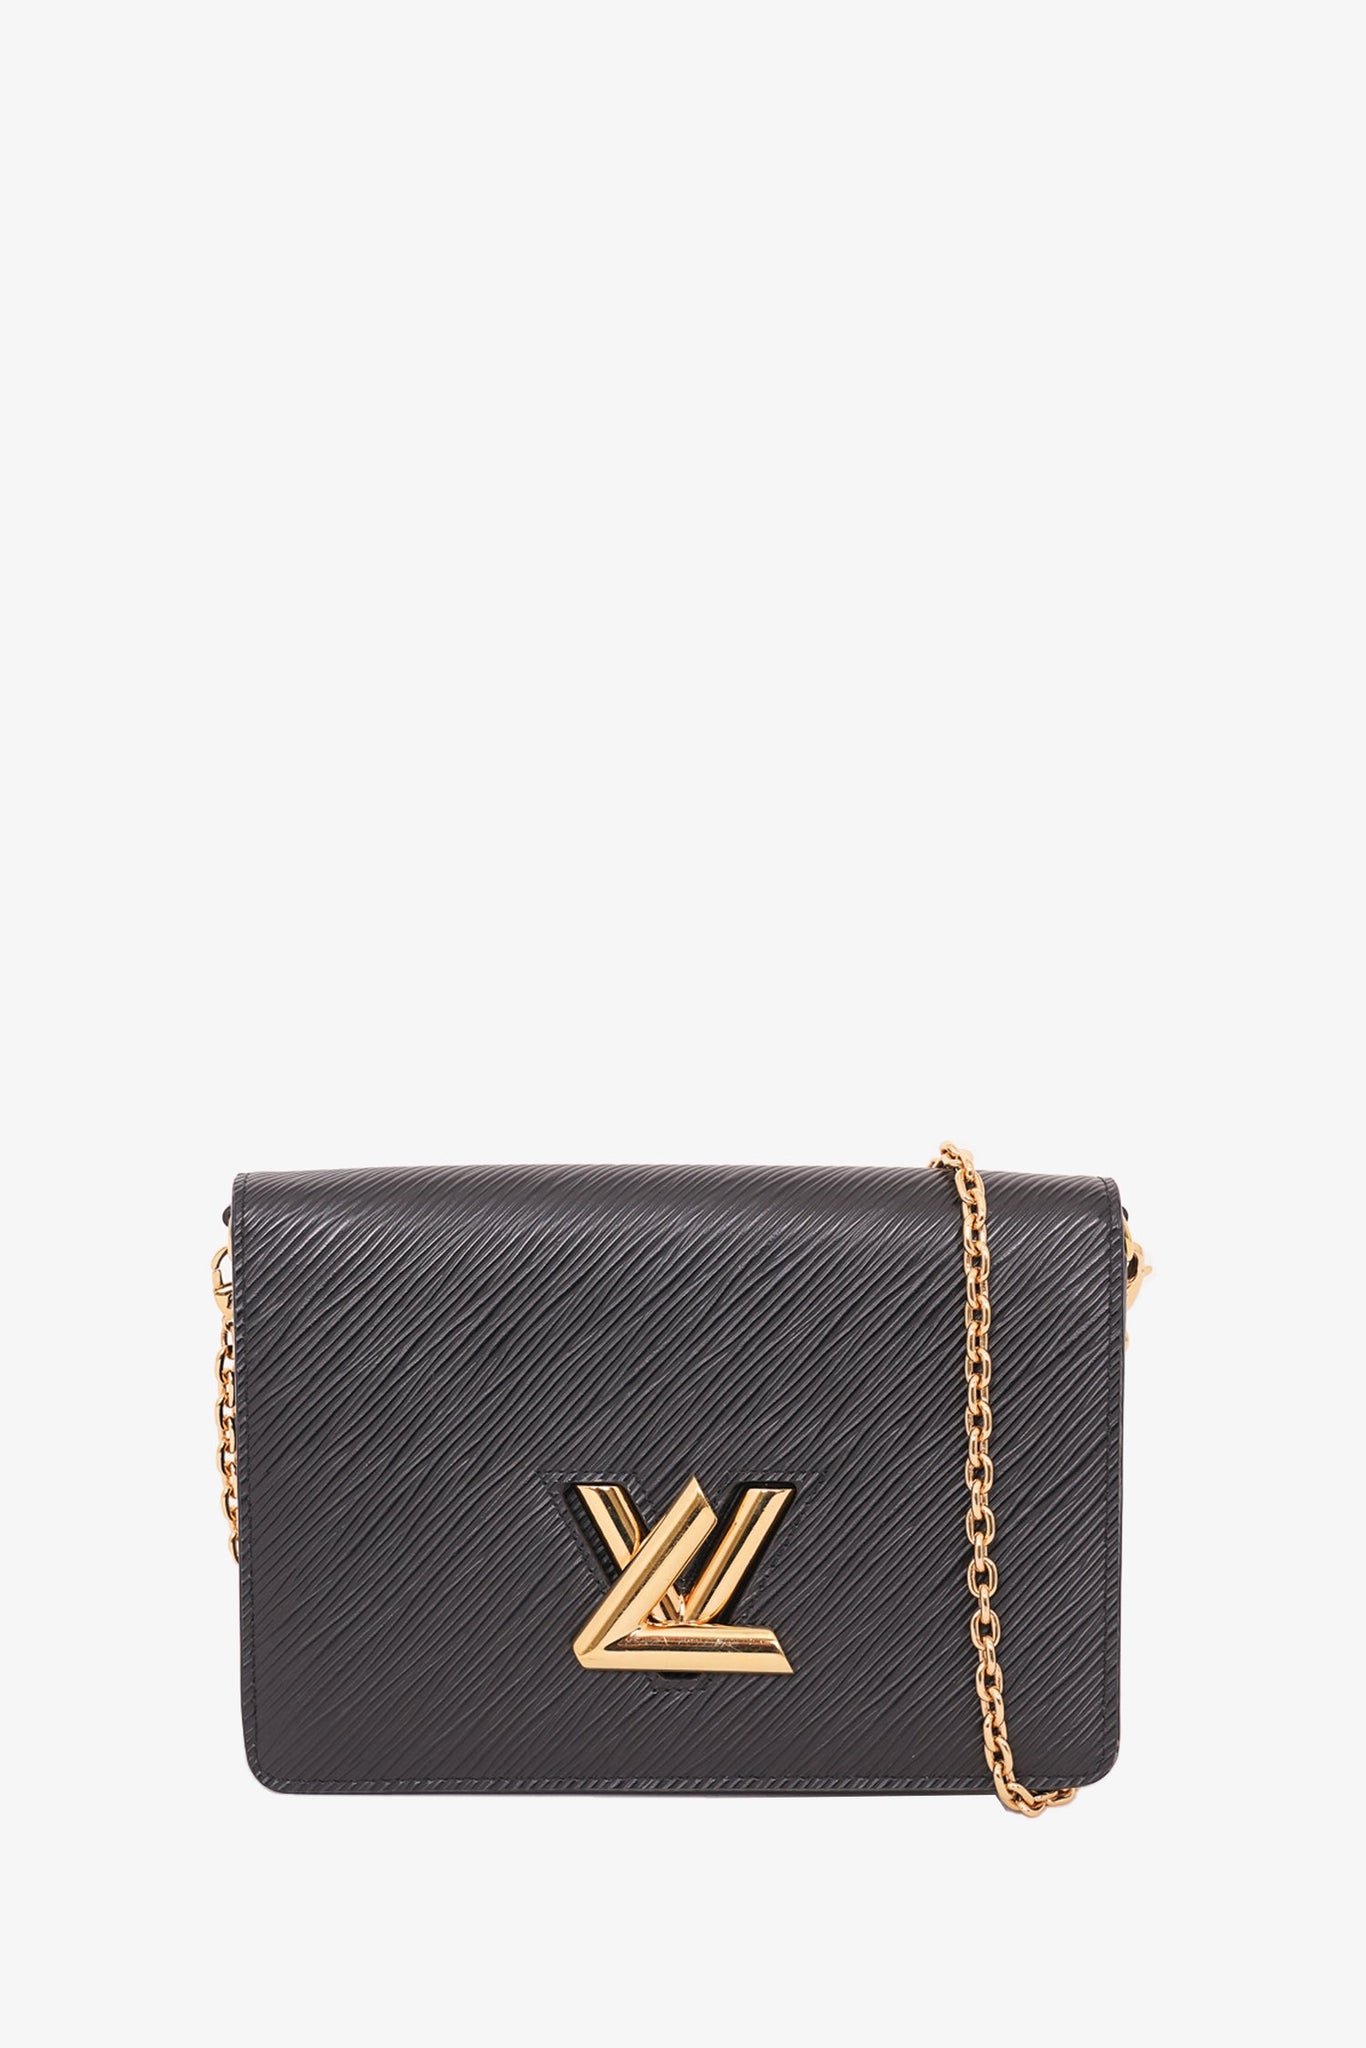 Shop Louis Vuitton EPI Twist belt chain wallet (M68750) by Bellaris